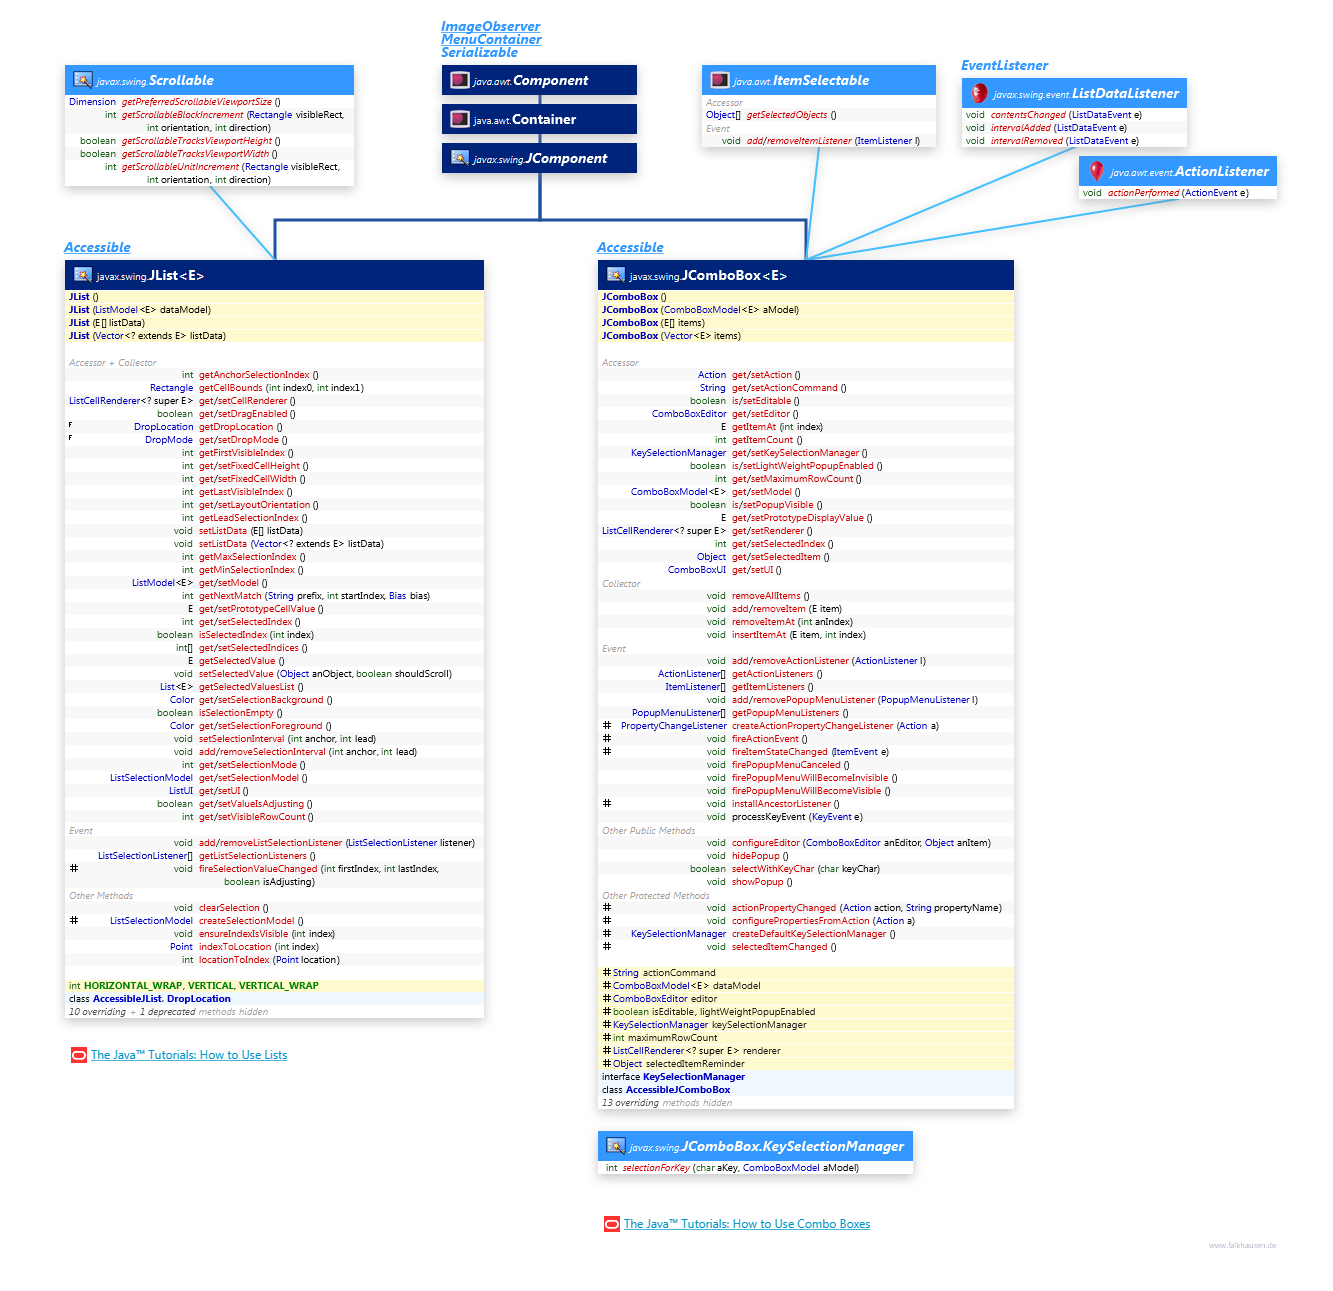 JList, JComboBox class diagram and api documentation for Java 8